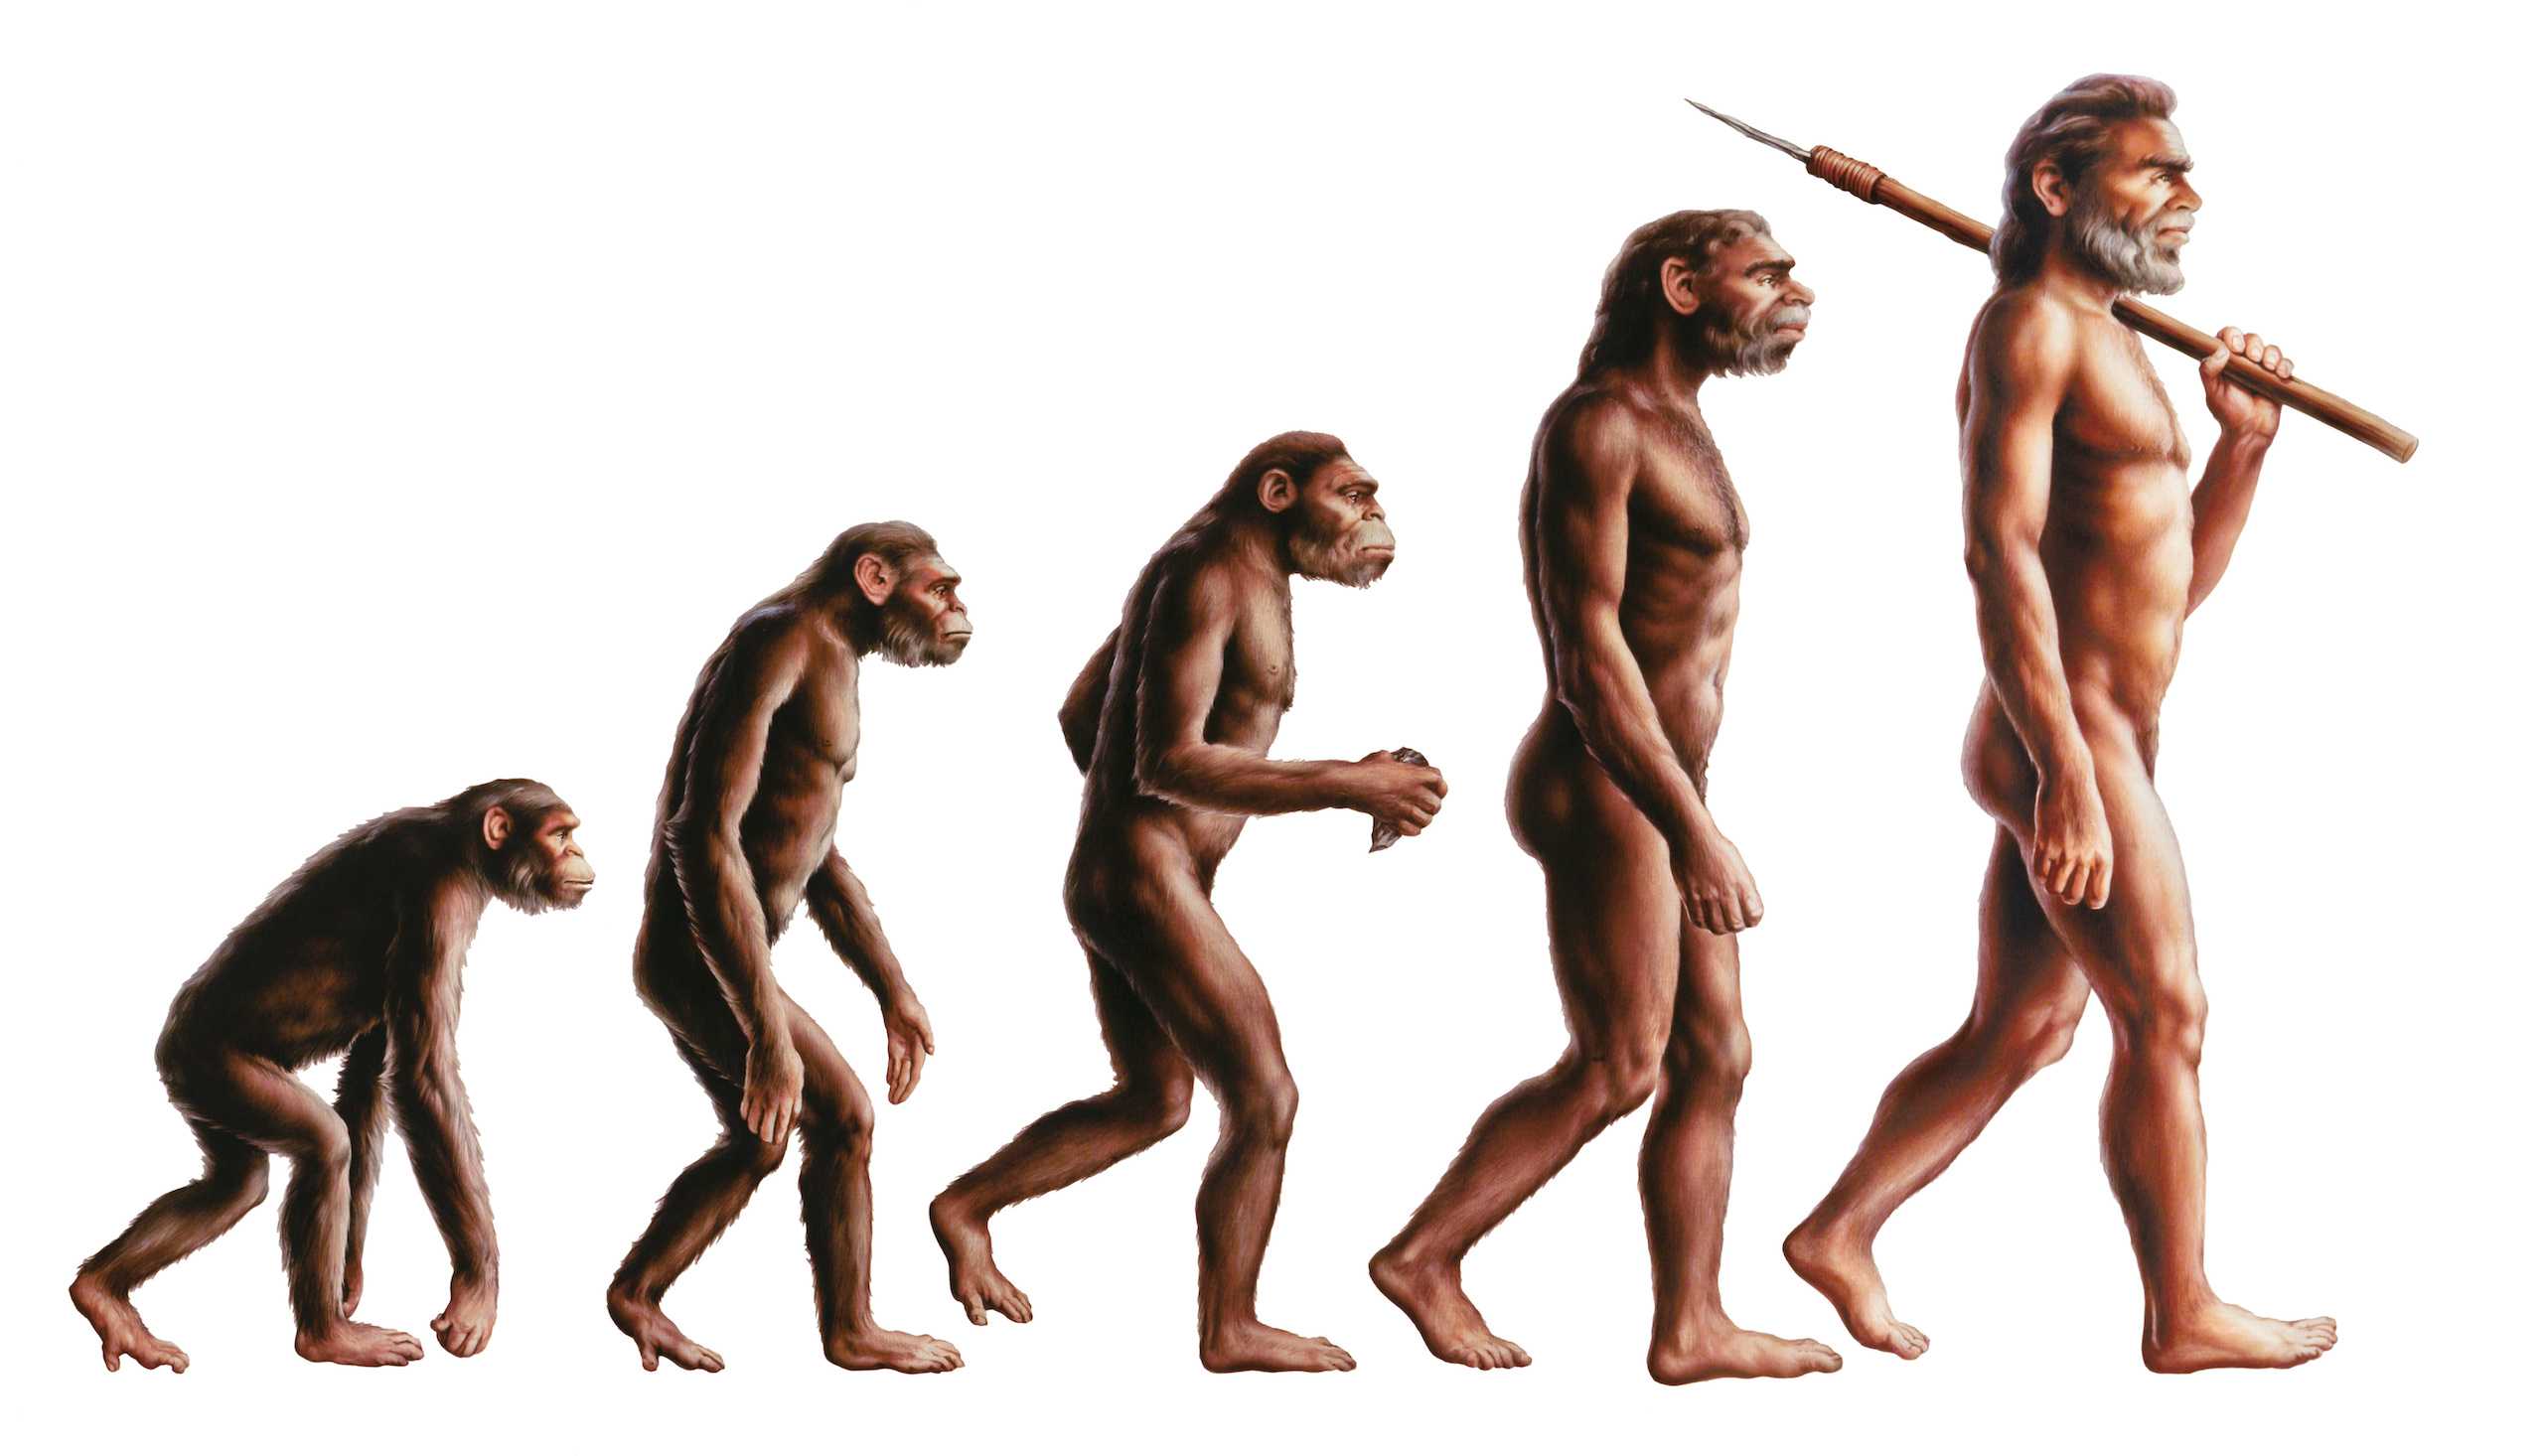 1 человек 5 7 5 6. Эволюция Дарвин хомо. Хомо сапиенс Эволюция. Эволюция человека до хомо сапиенс. Эволюцию обезьяны в хомо сапиенс.